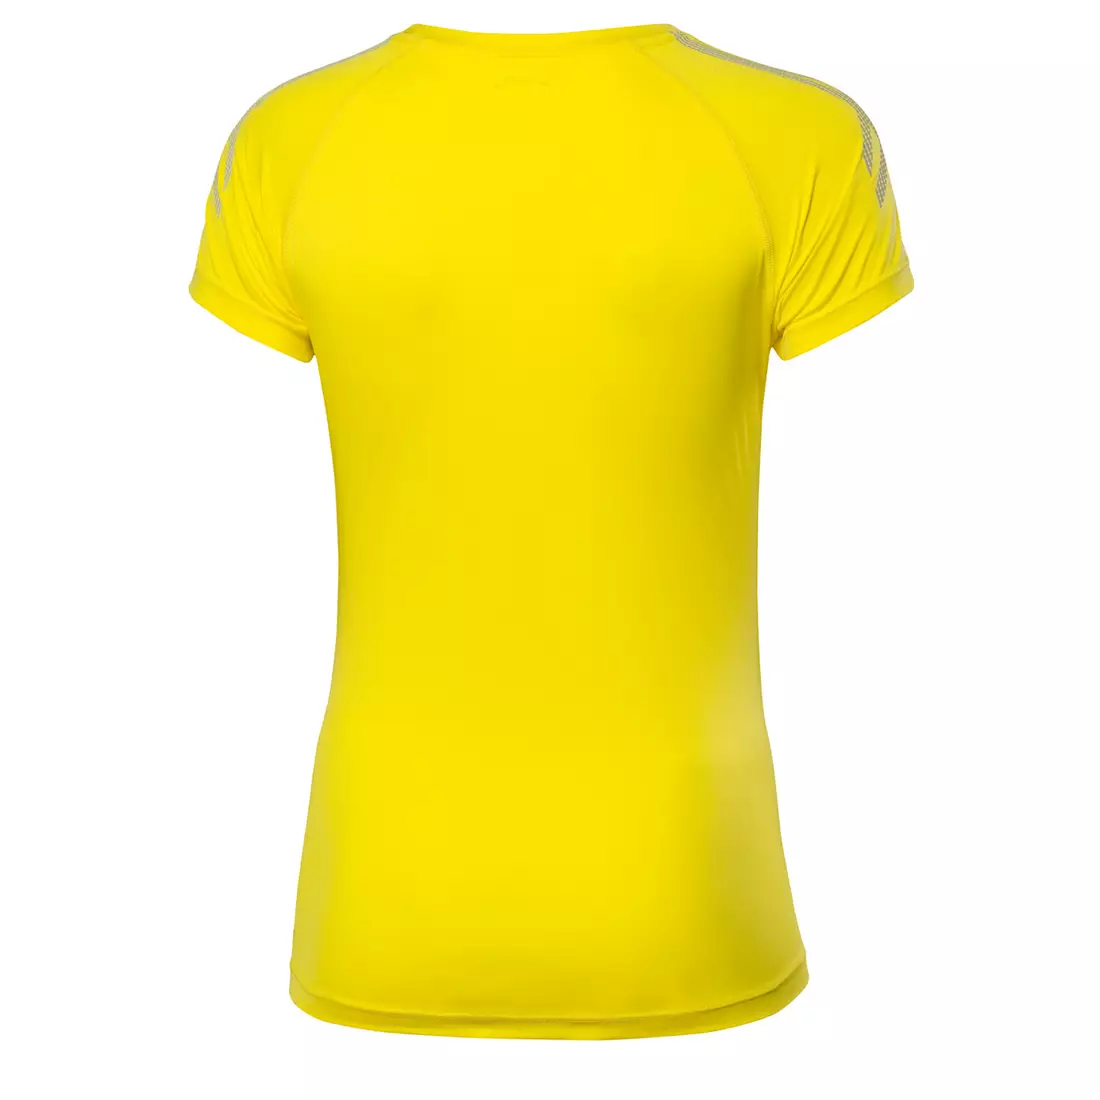 ASICS 339907-0343 TIGER TEE – Damen-Lauf-T-Shirt, Farbe: Gelb